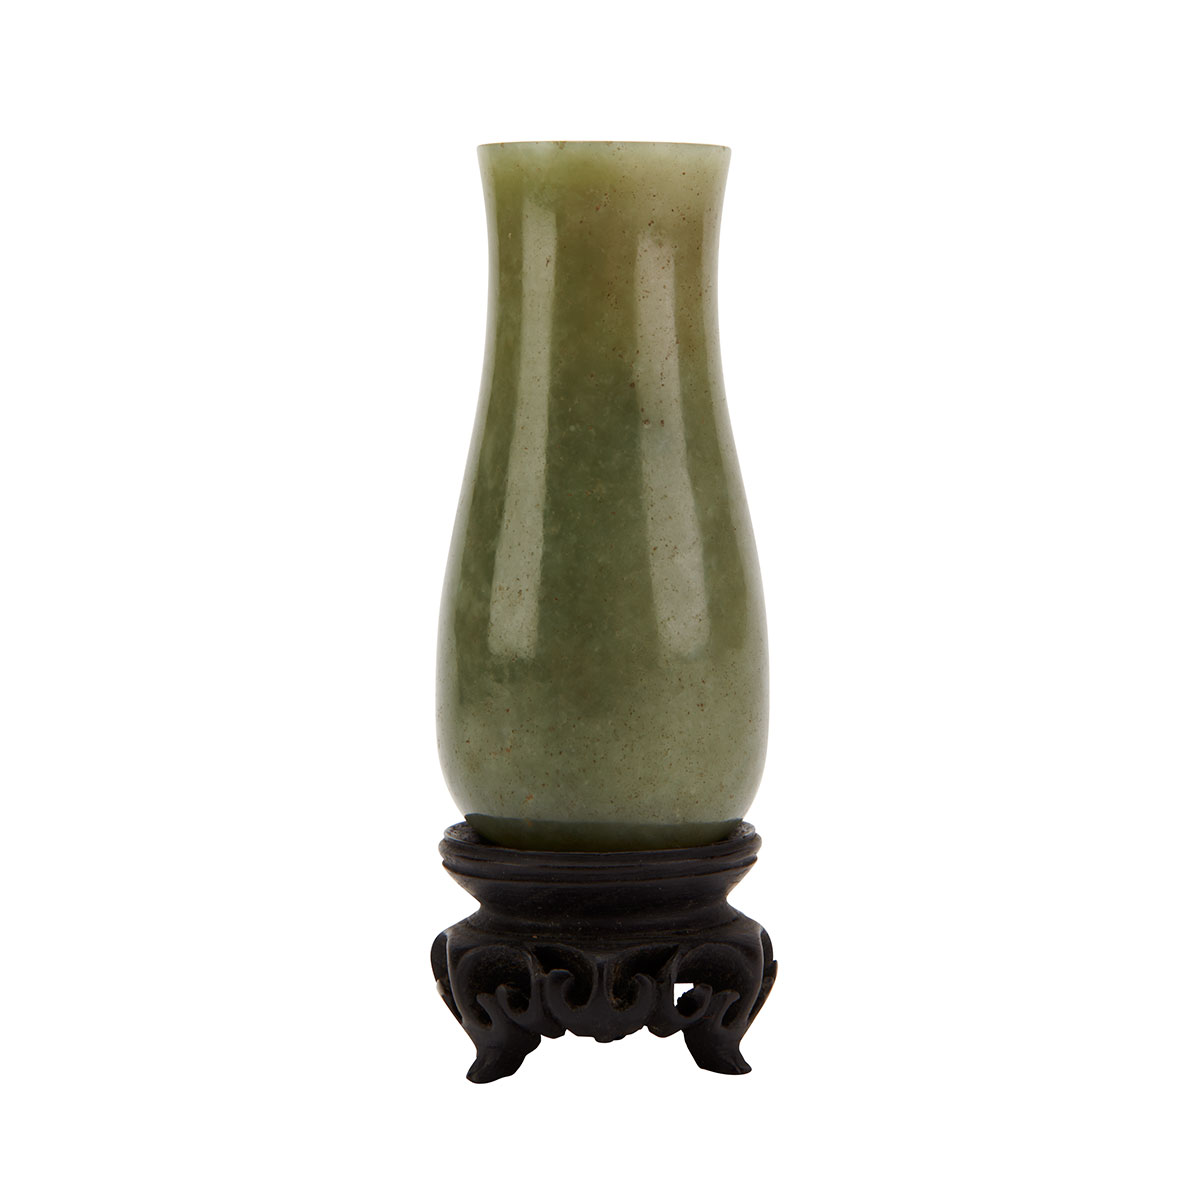 Green Jade Vase 19th Century   The smooth